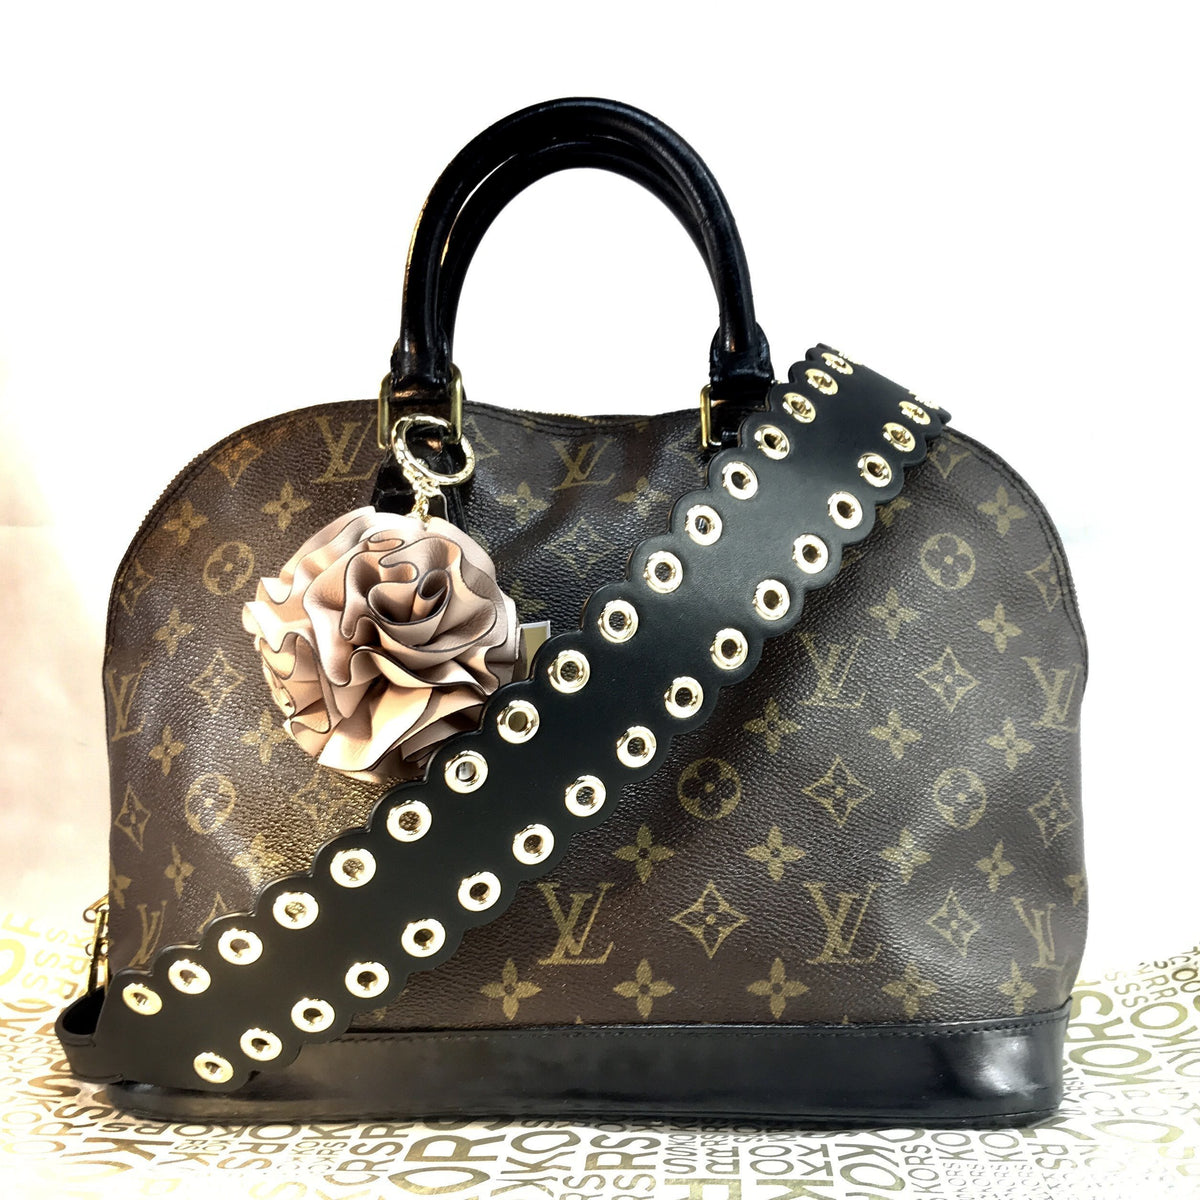 Just Gorgeous Studio Michael Kors Flower Ball Bag Charm